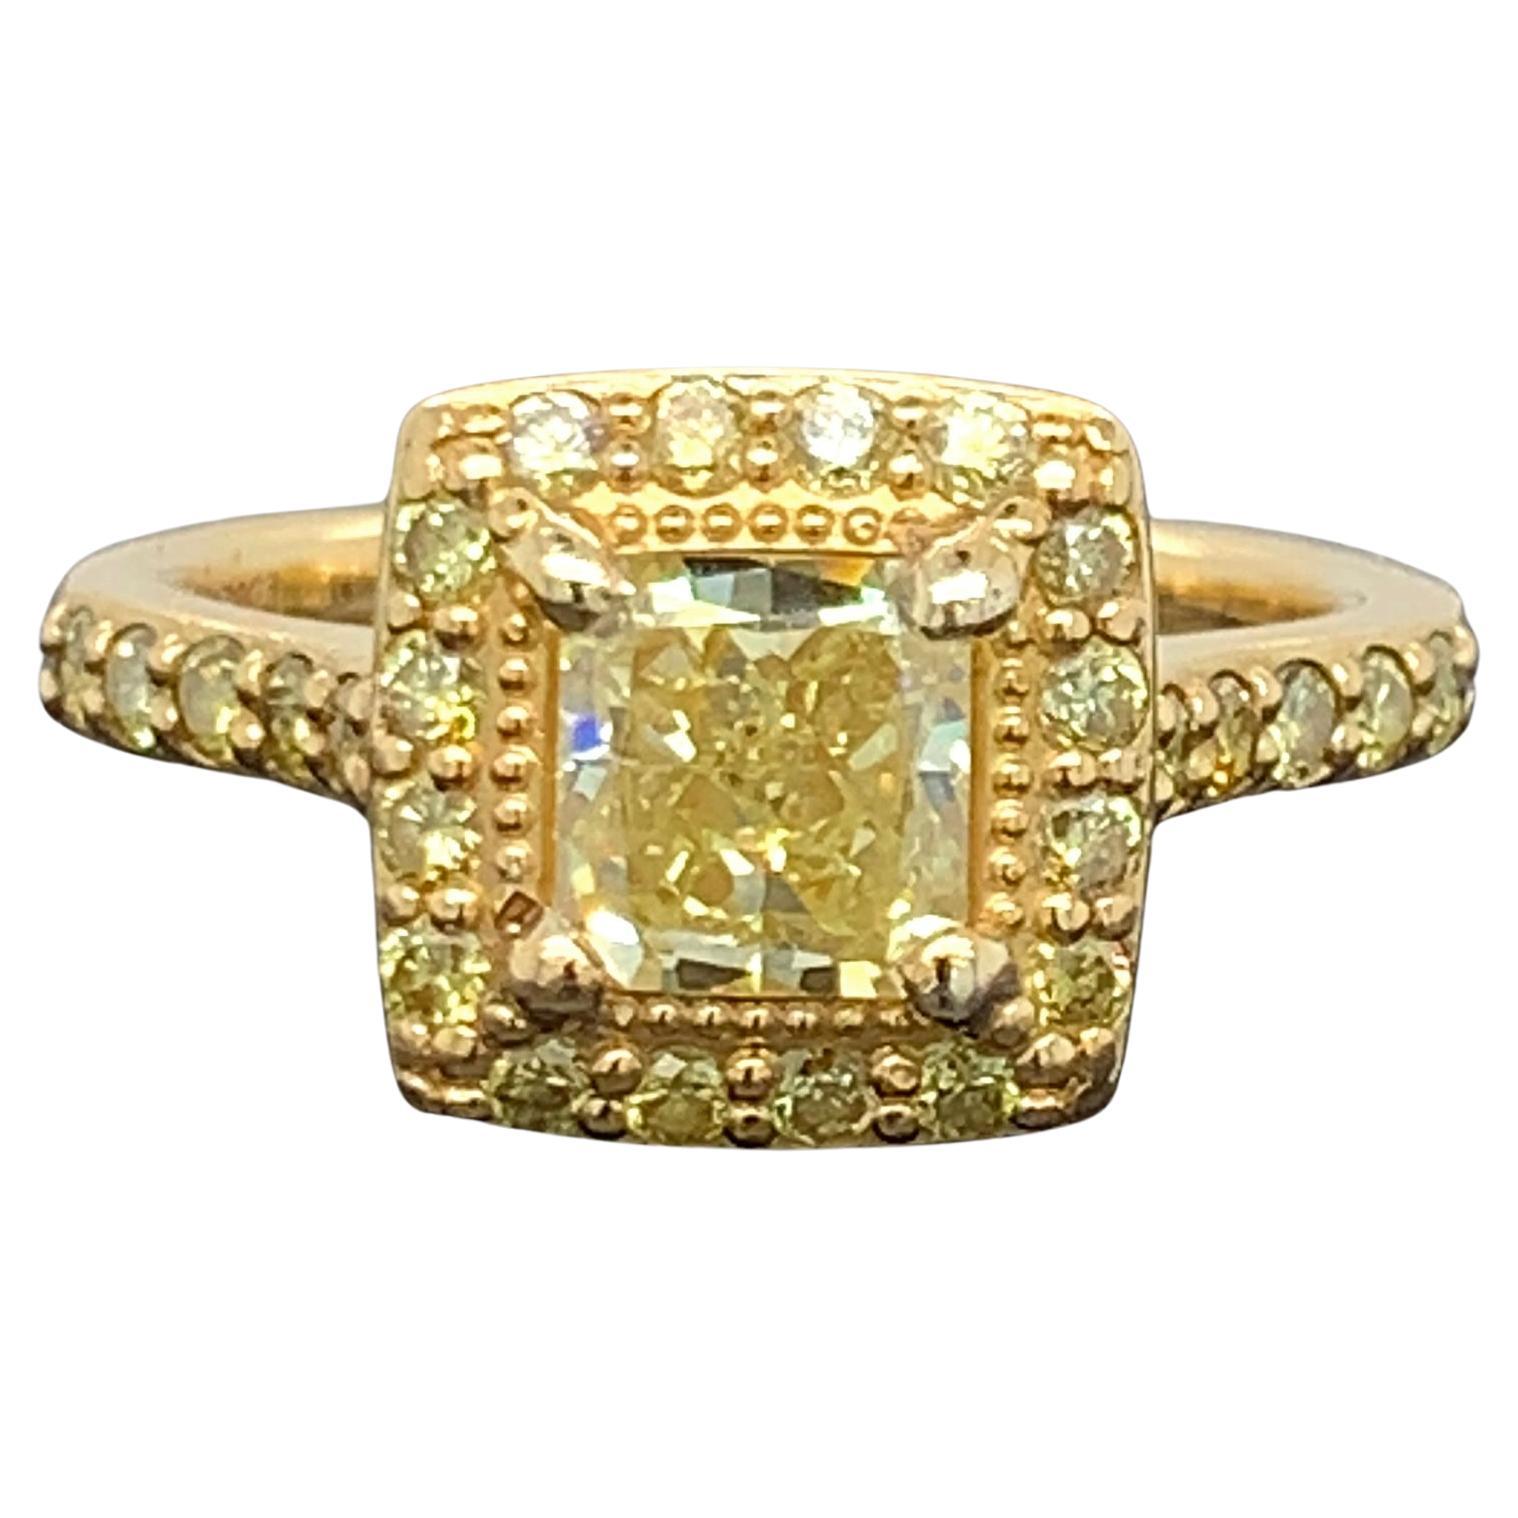 1.78 Tcw Fancy Yellow Diamond Ring VS2 Natural GIA Certified 18k Yellow Gold